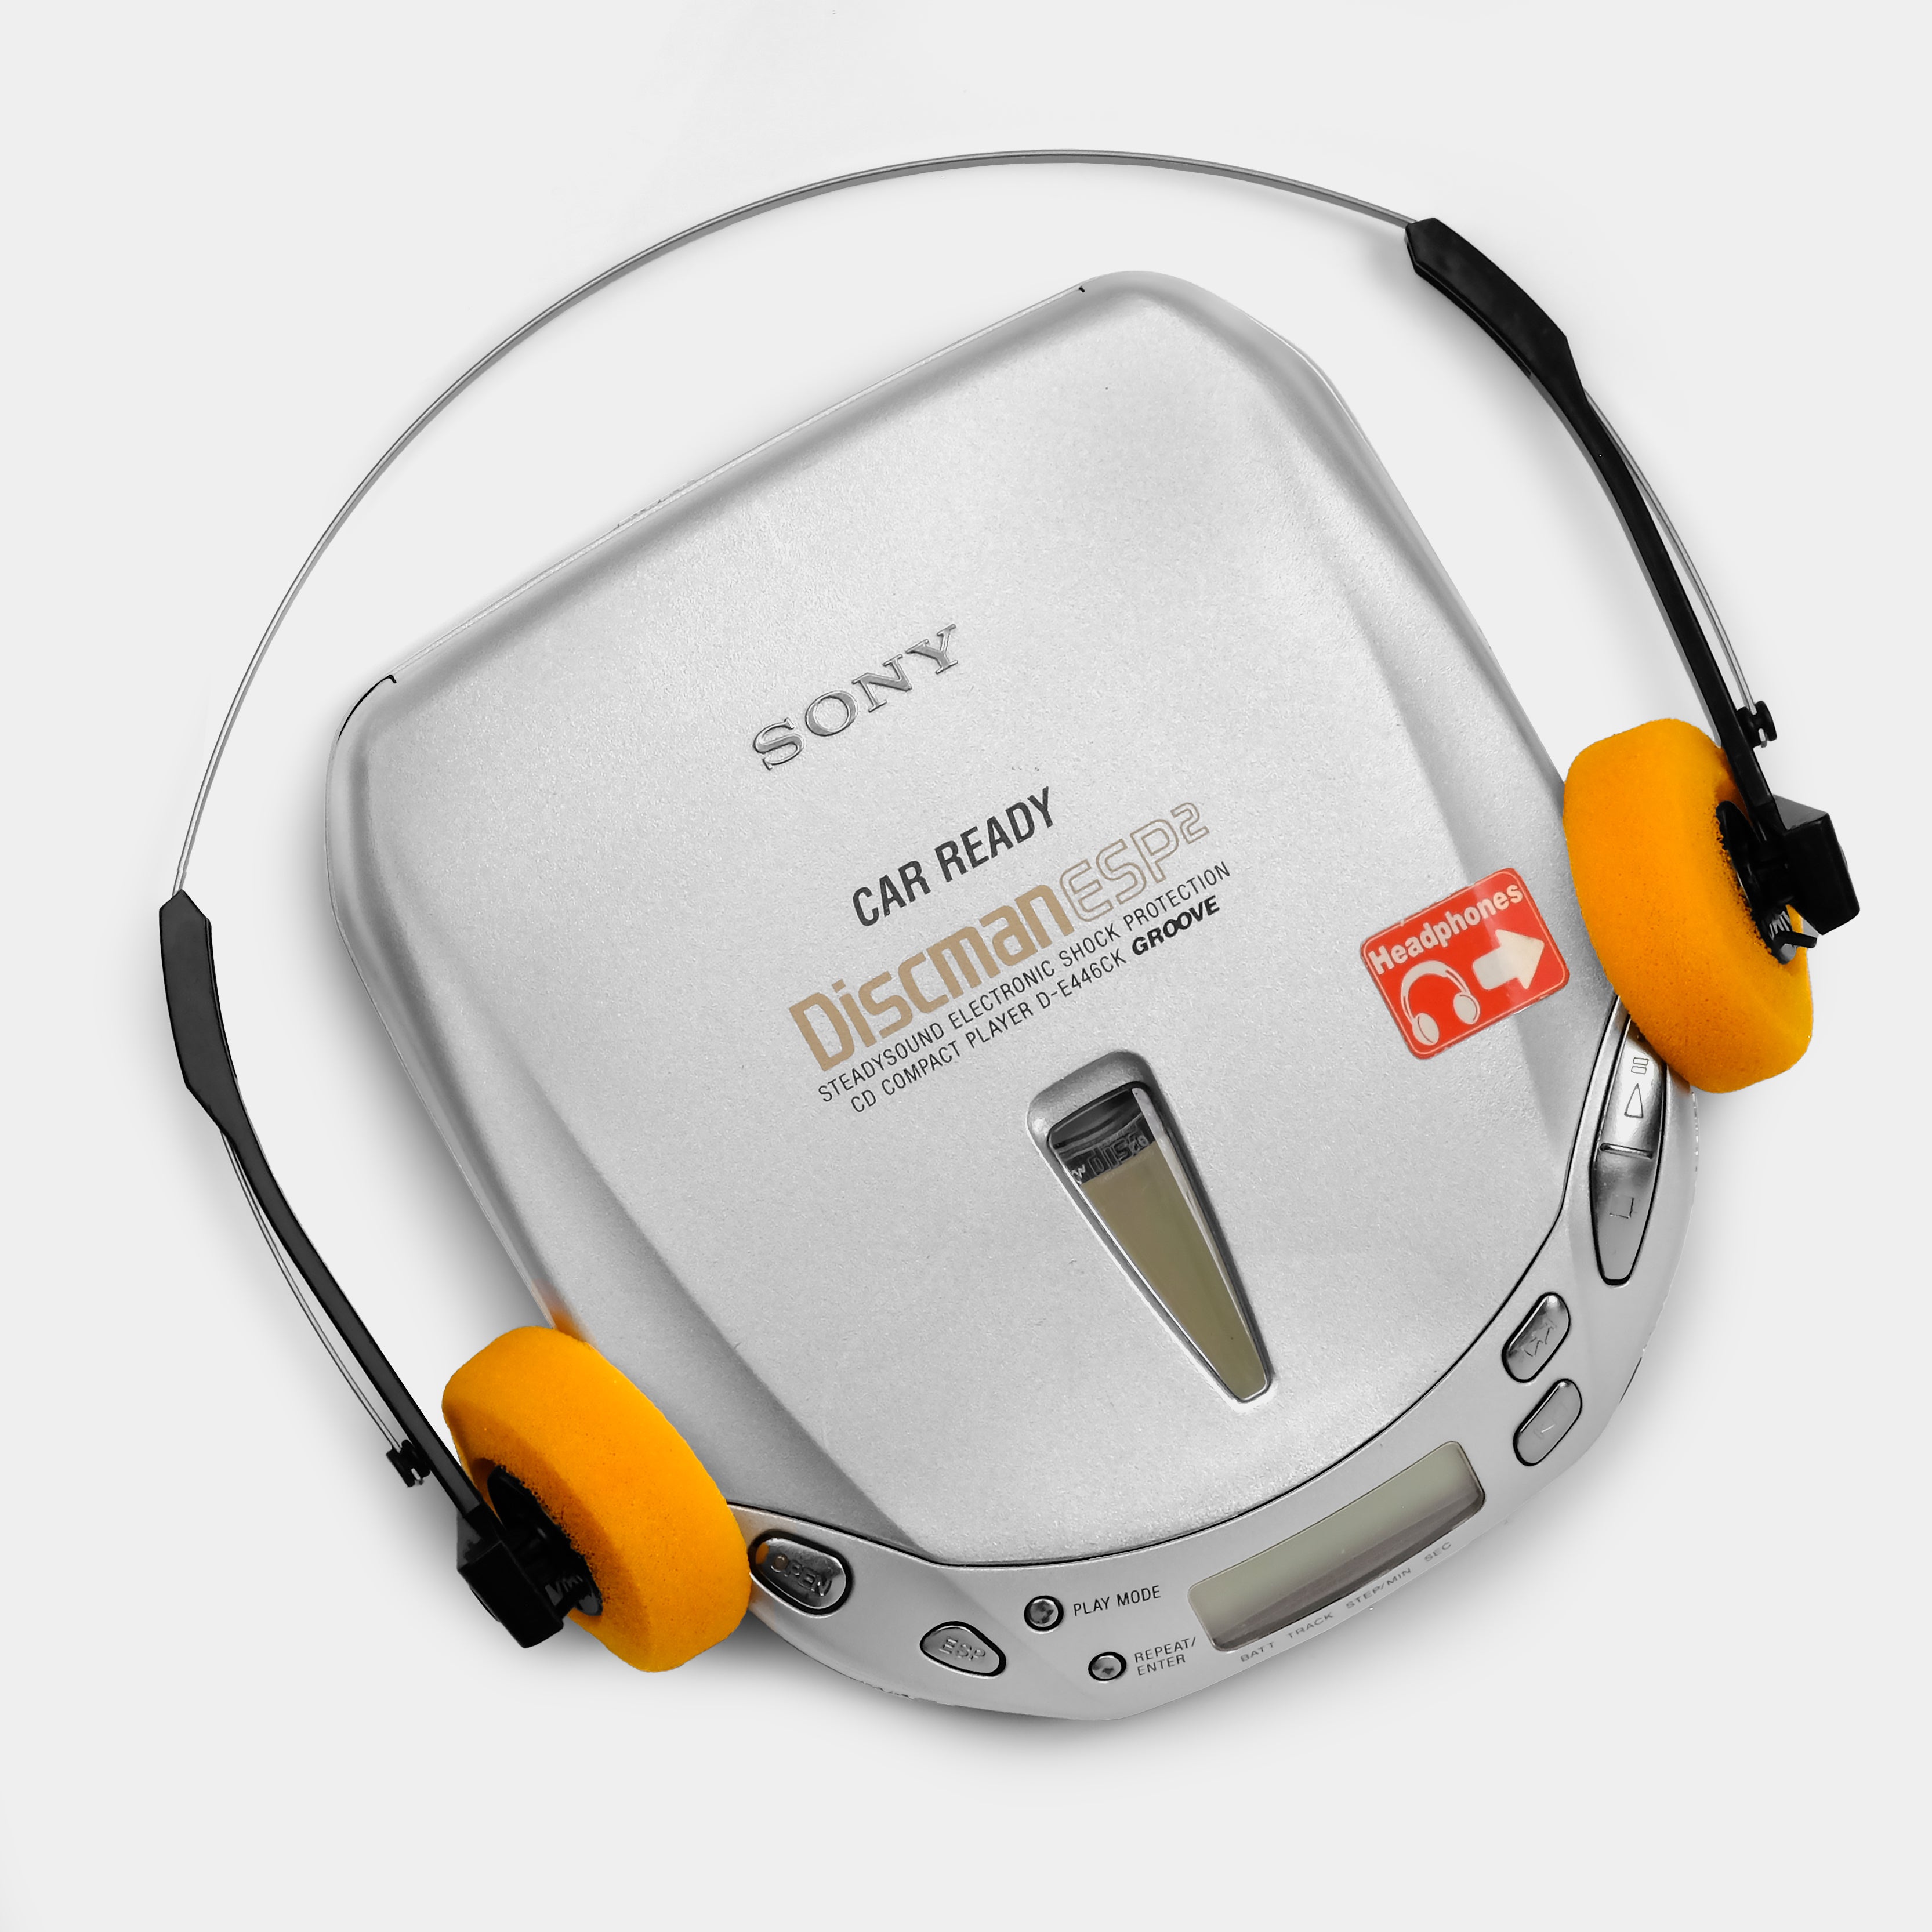 Sony Discman D-E446CK Portable CD Player